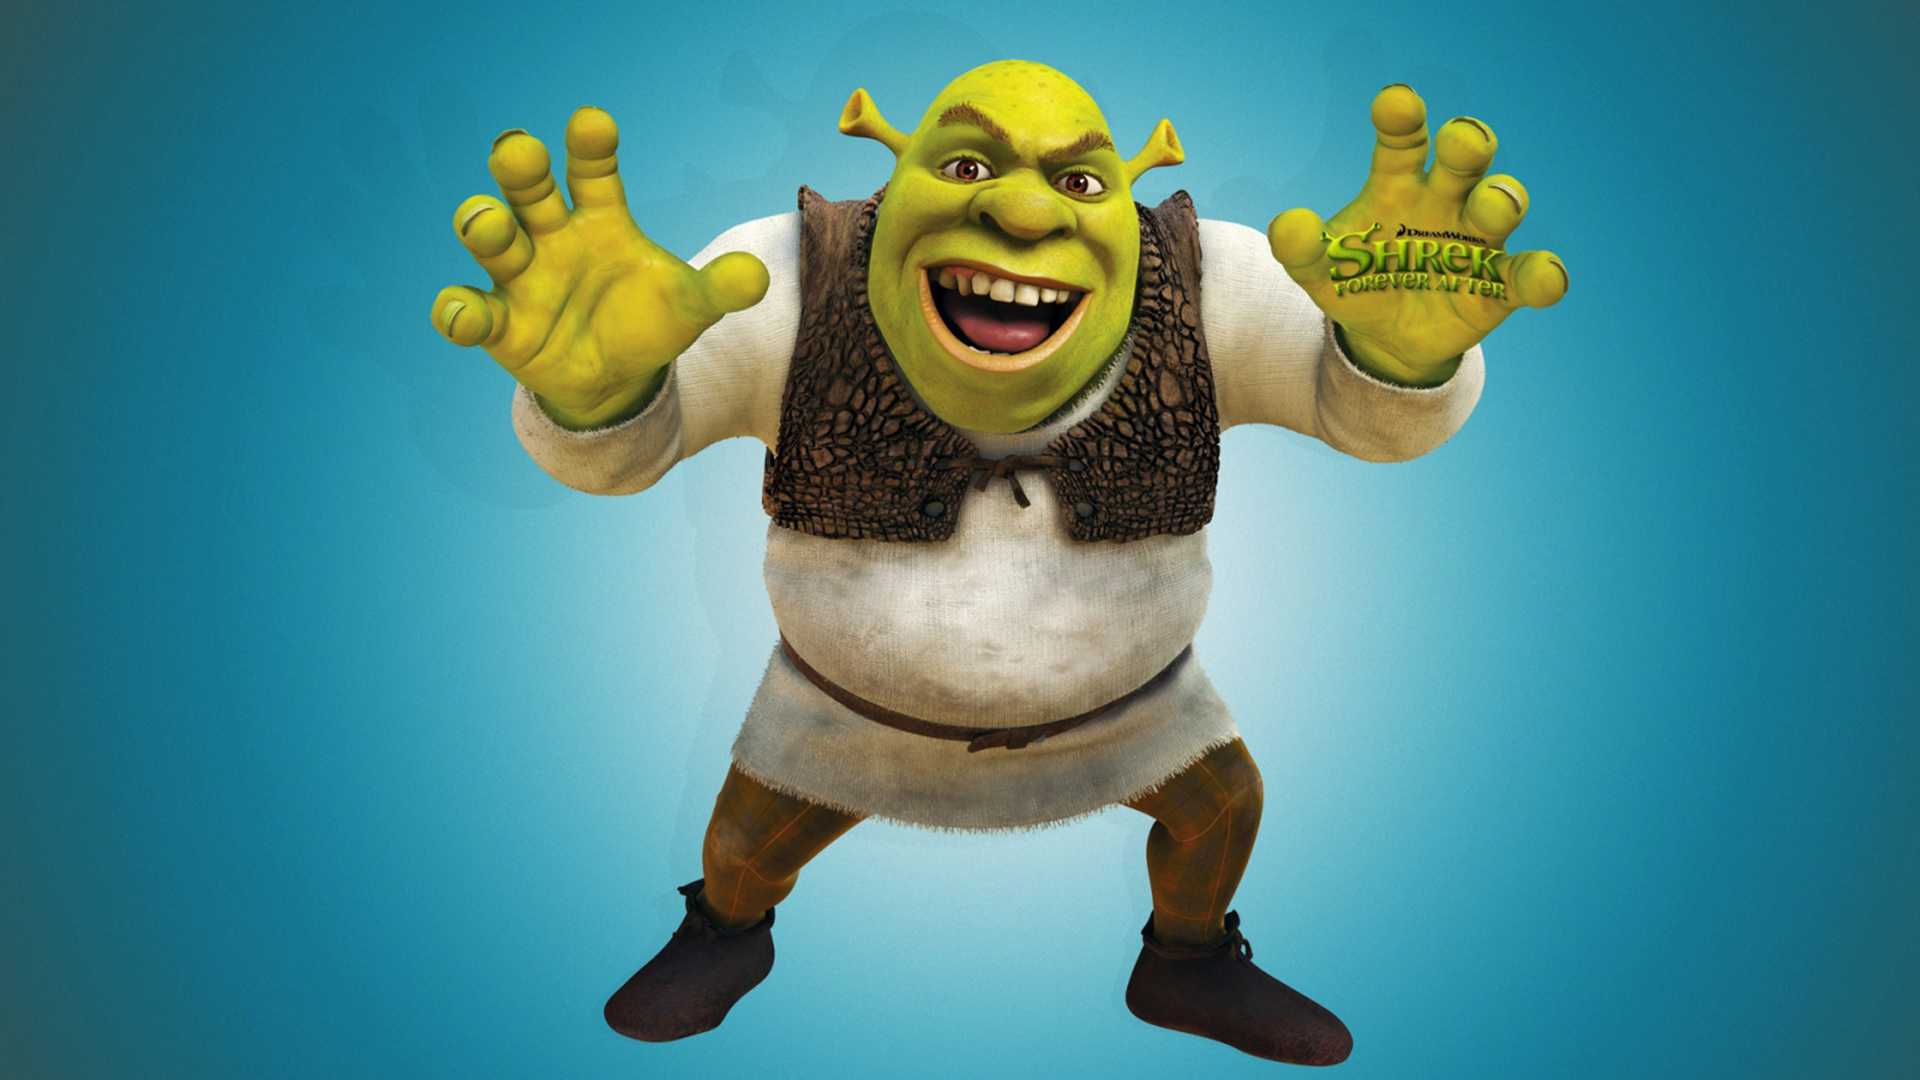 Shrek  Shrek The Ogre Wallpaper Download  MobCup